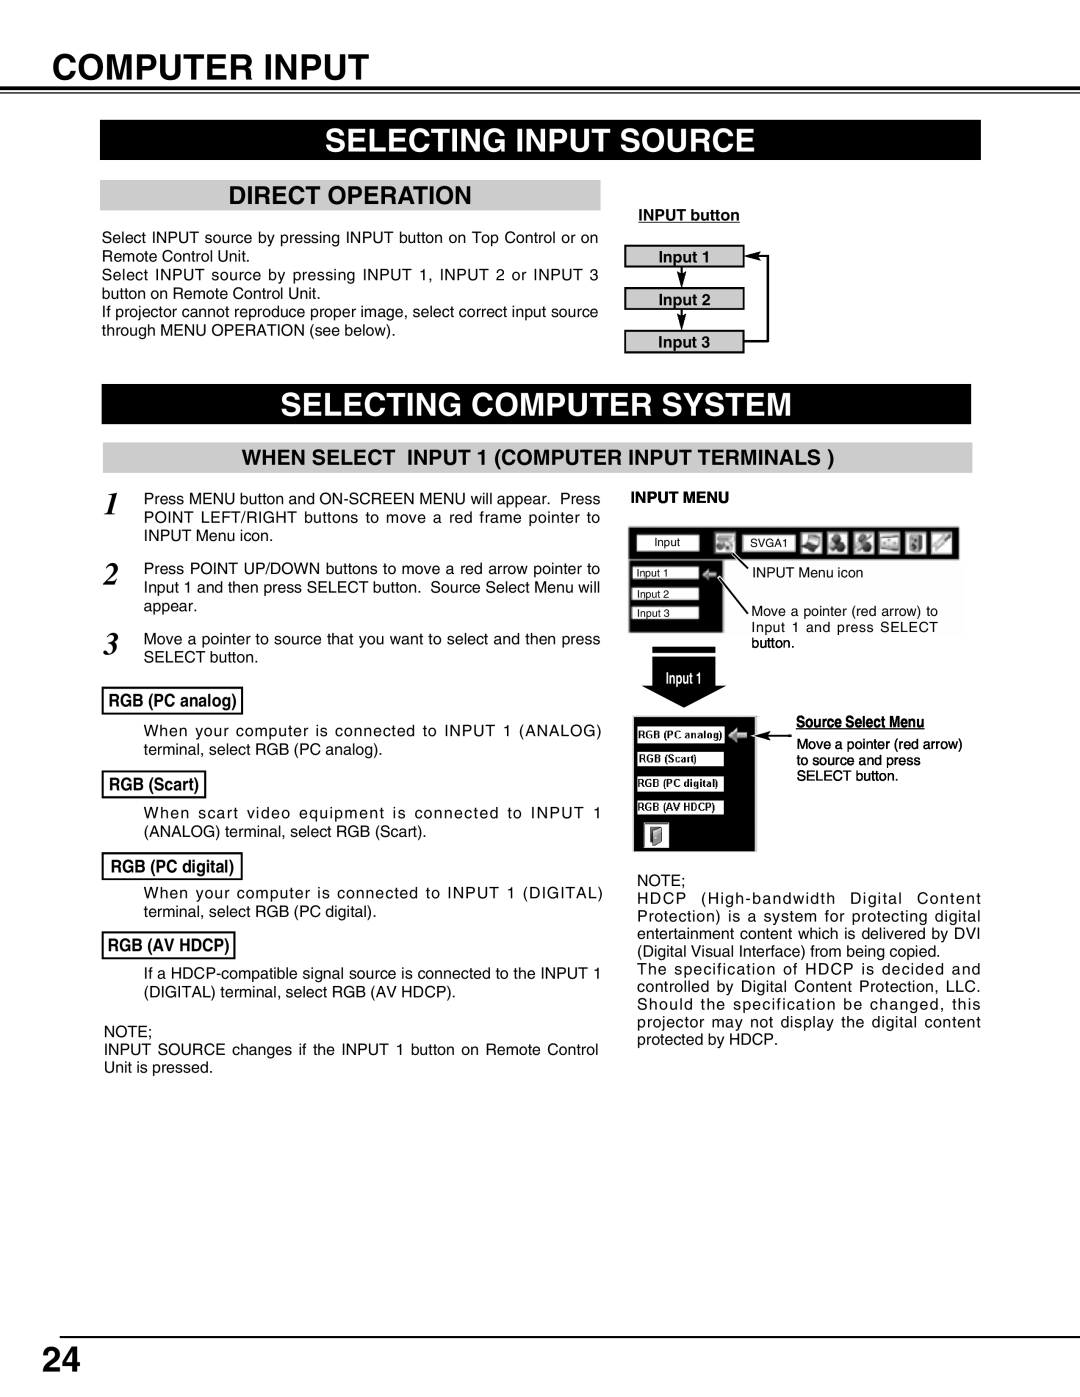 Sanyo PLV75L/PLV-80L Computer Input, Selecting Input Source, Selecting Computer System, INPUT button Input Input Input 